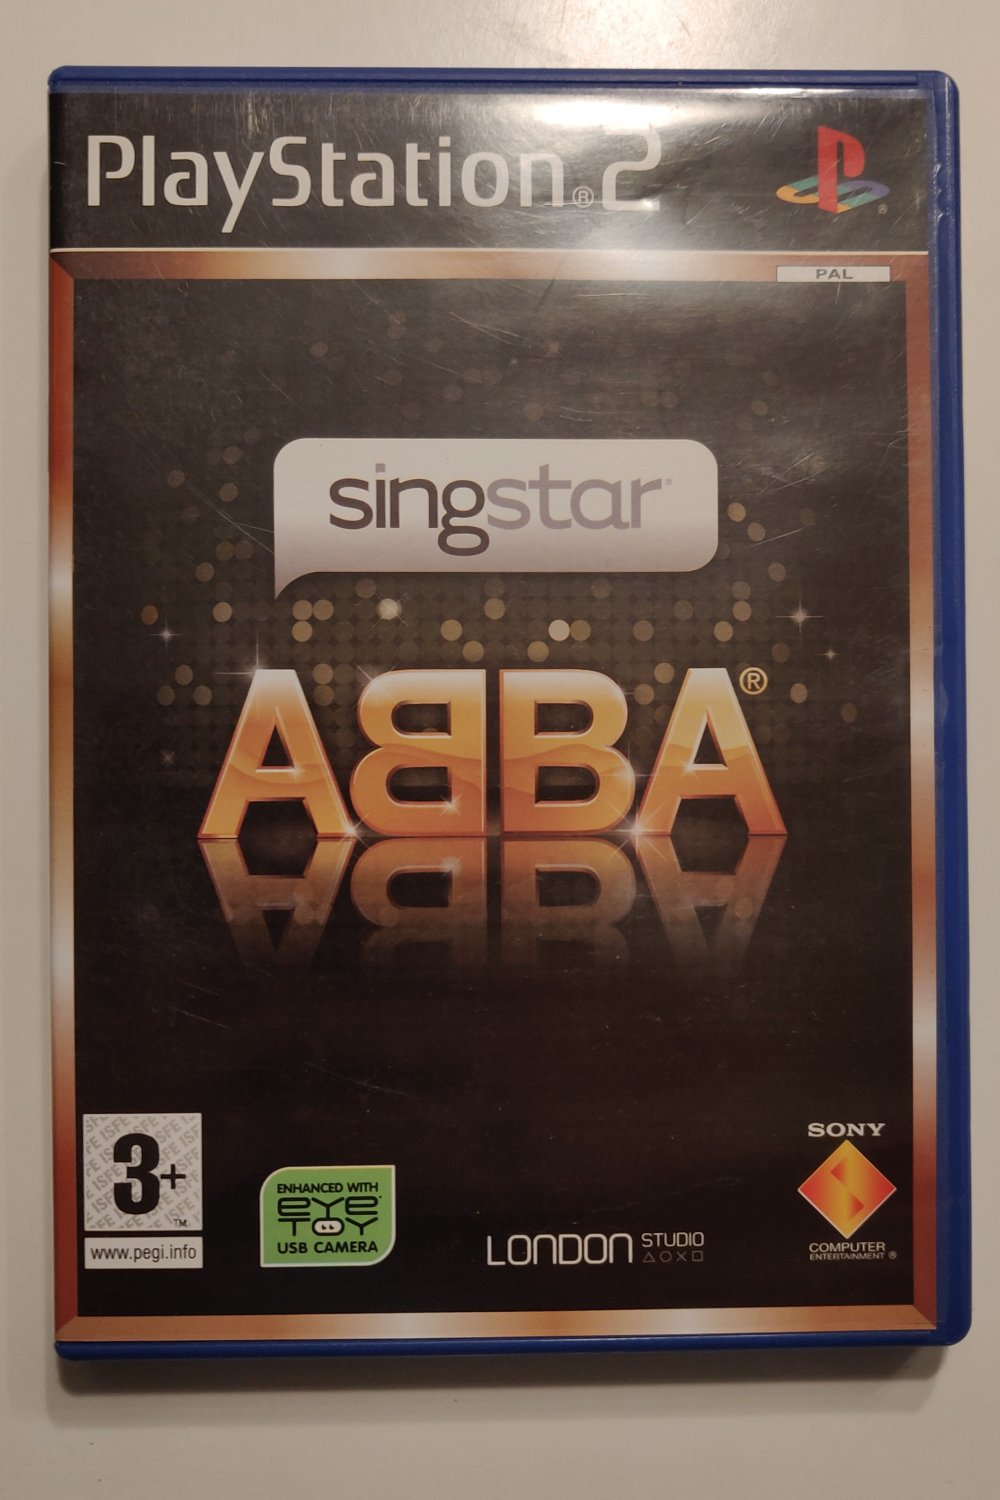 SingStar ABBA (Playstation 2 PAL) (CIB)